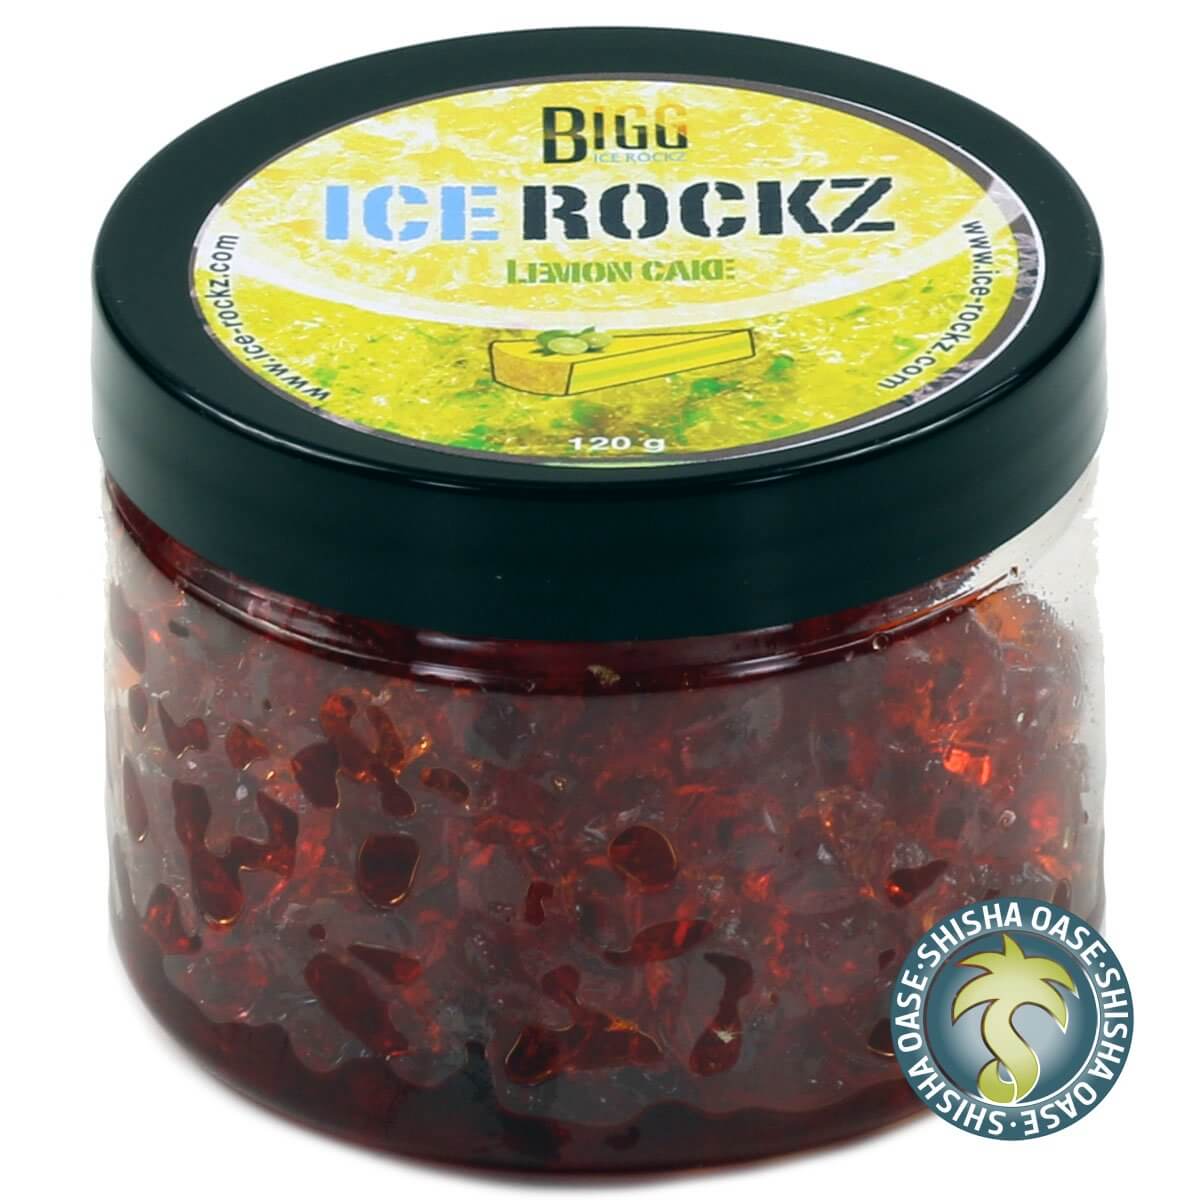 Bigg Ice Rockz - Lemon Cake 120g